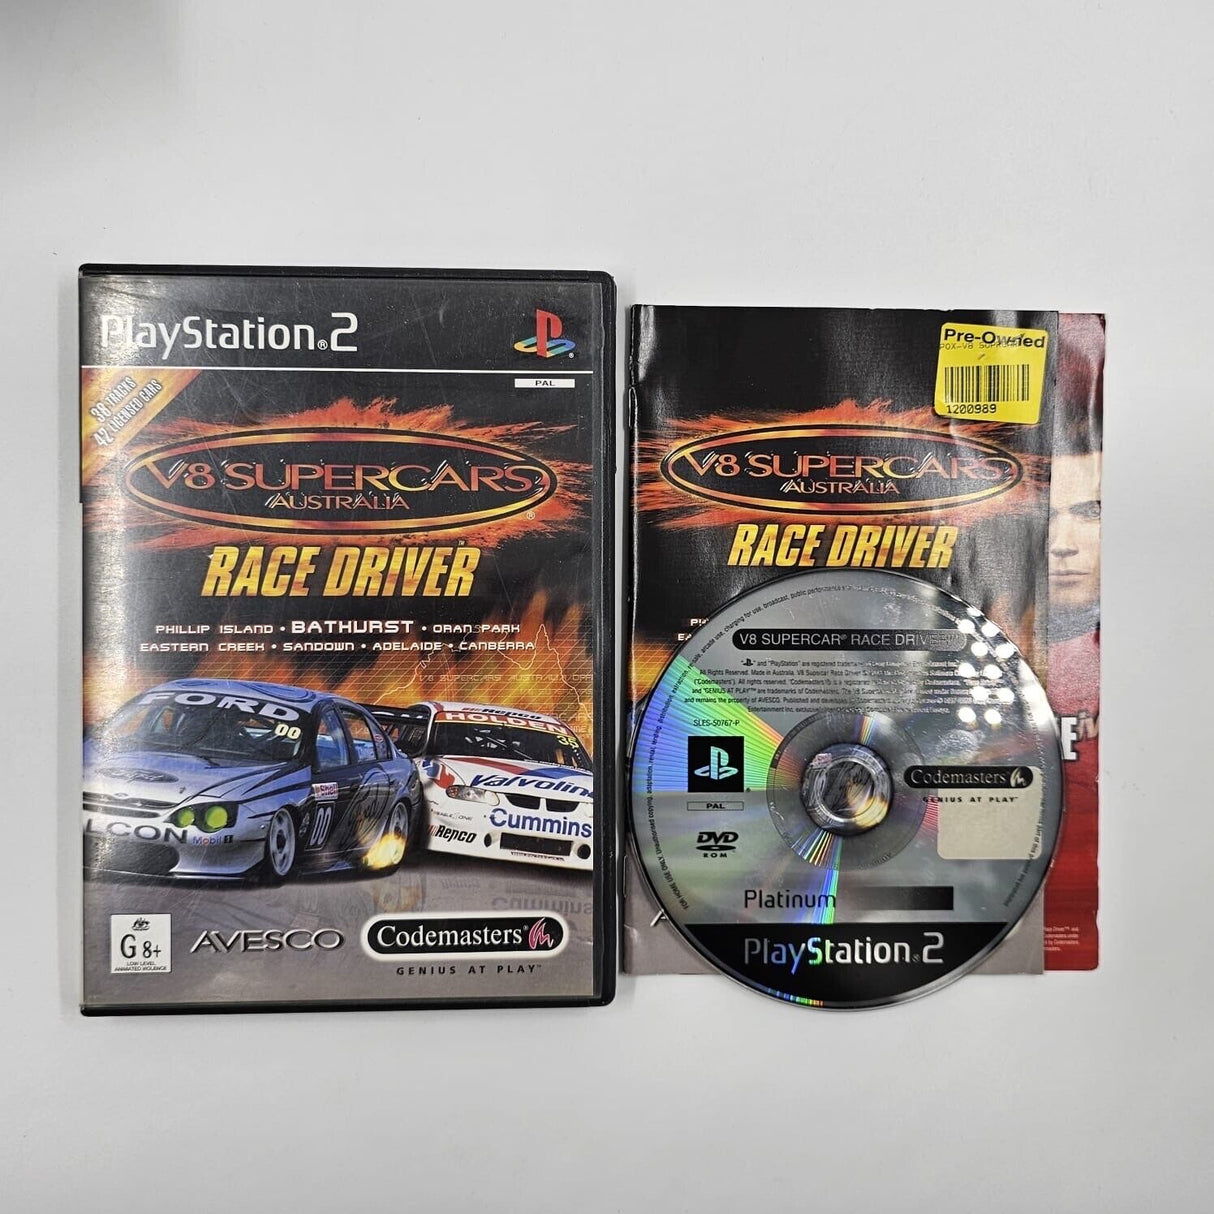 V8 Supercars Australia Race Driver PS2 Playstation 2 Game + Manual PAL